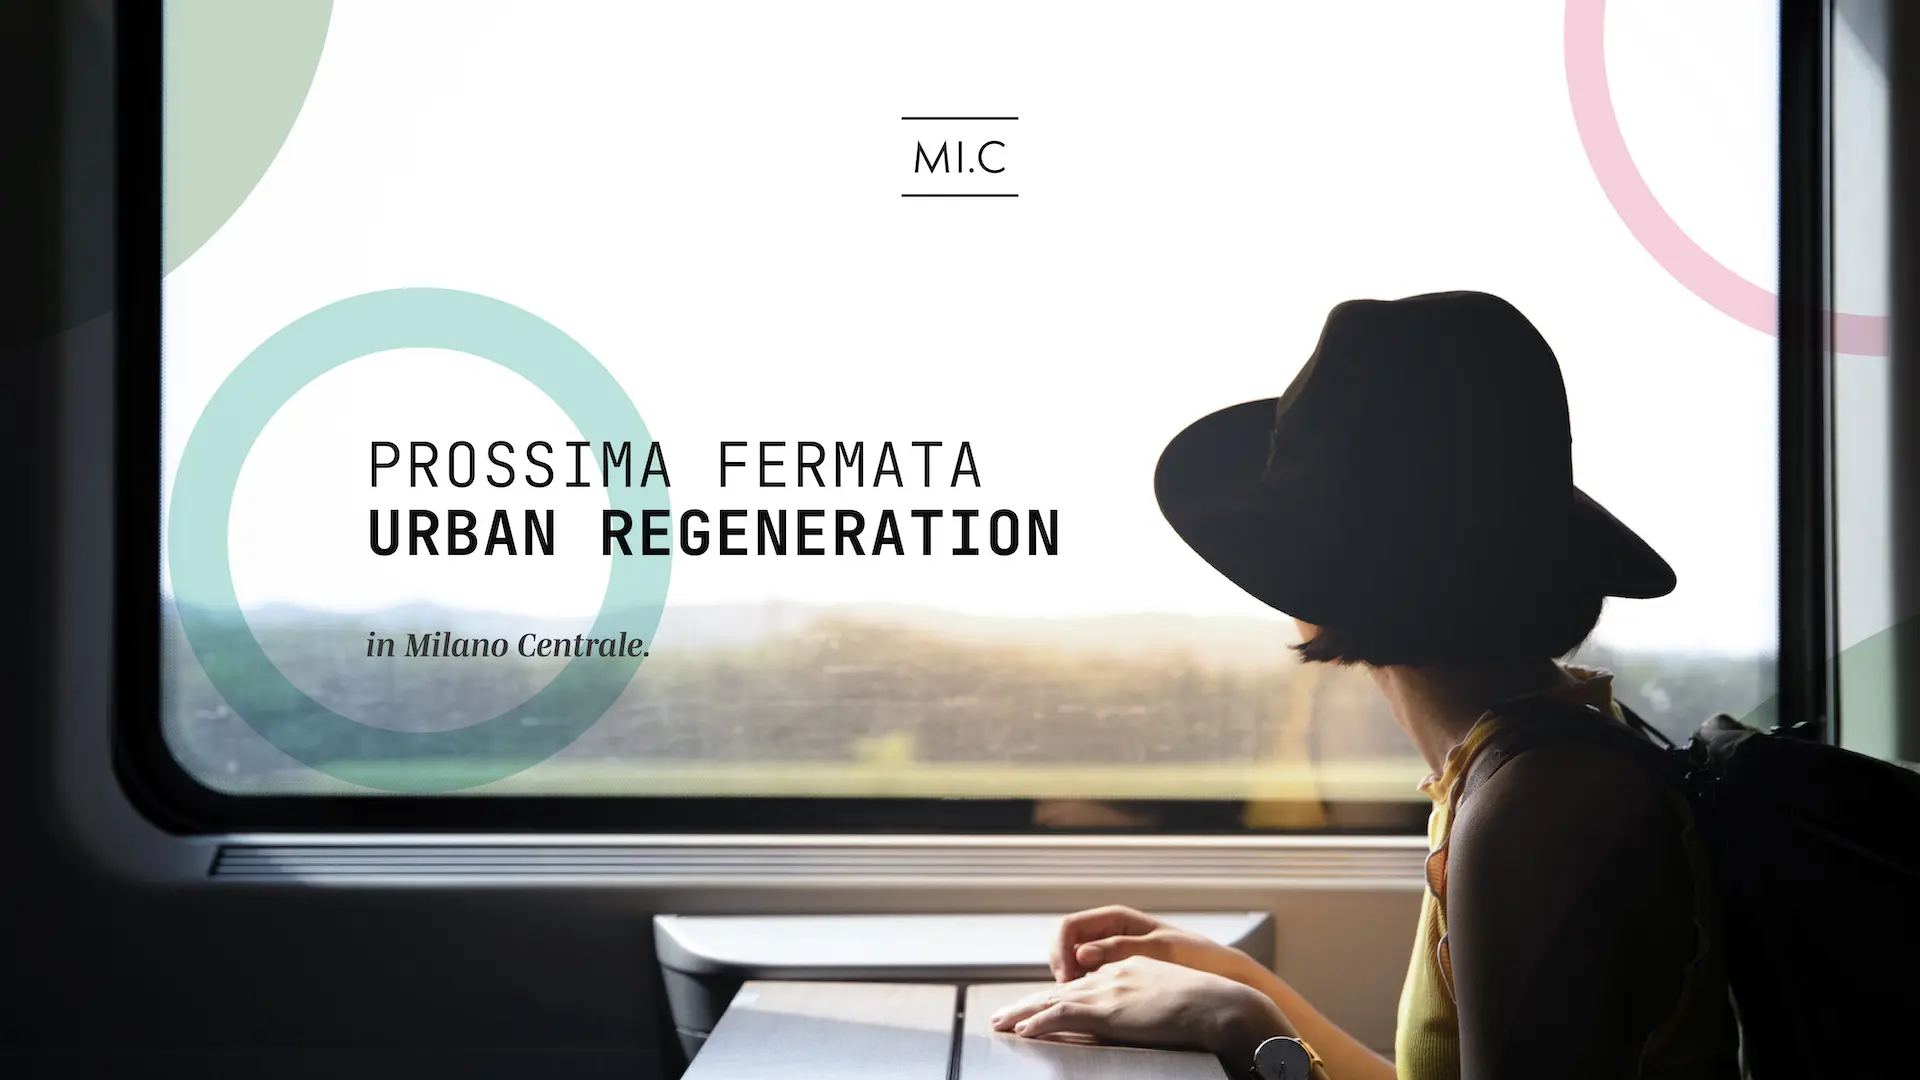 Next stop Urban regeneration